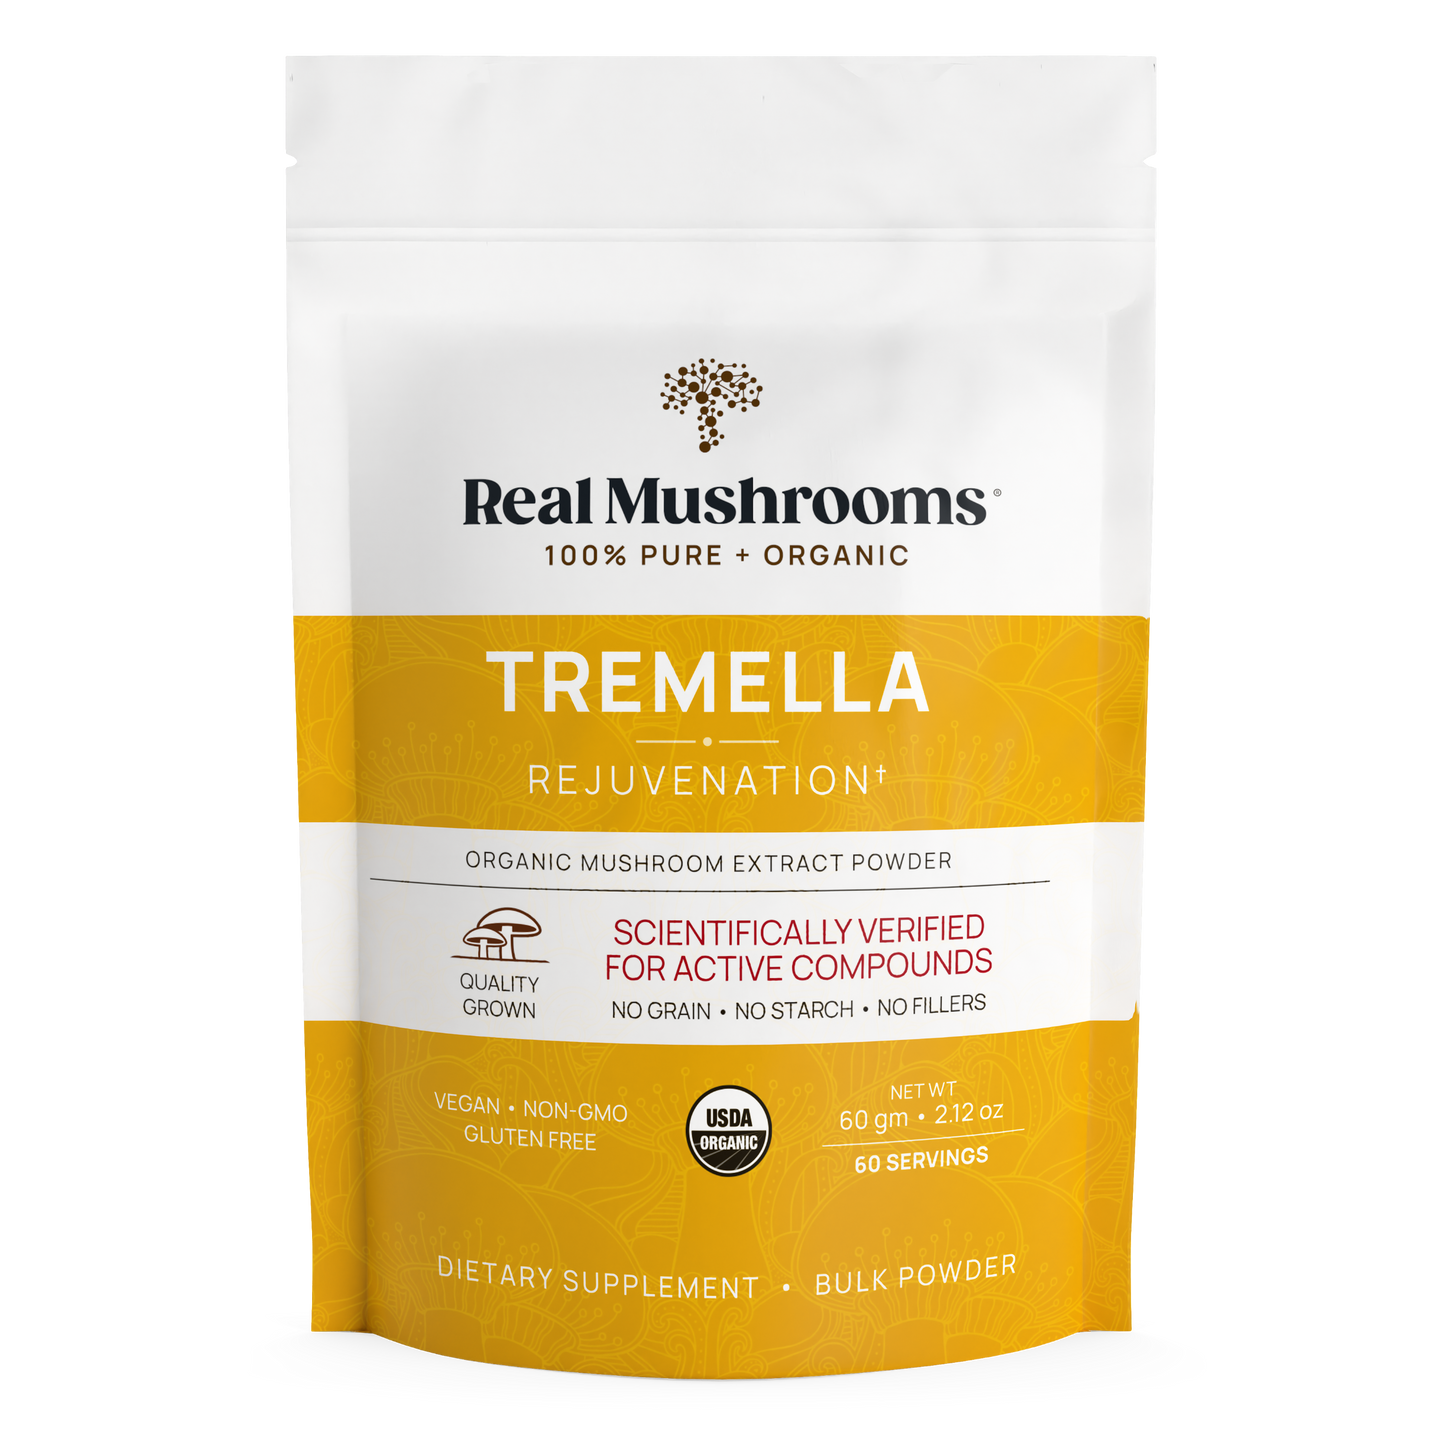 Real Mushrooms Organic Tremella Extract Powder.